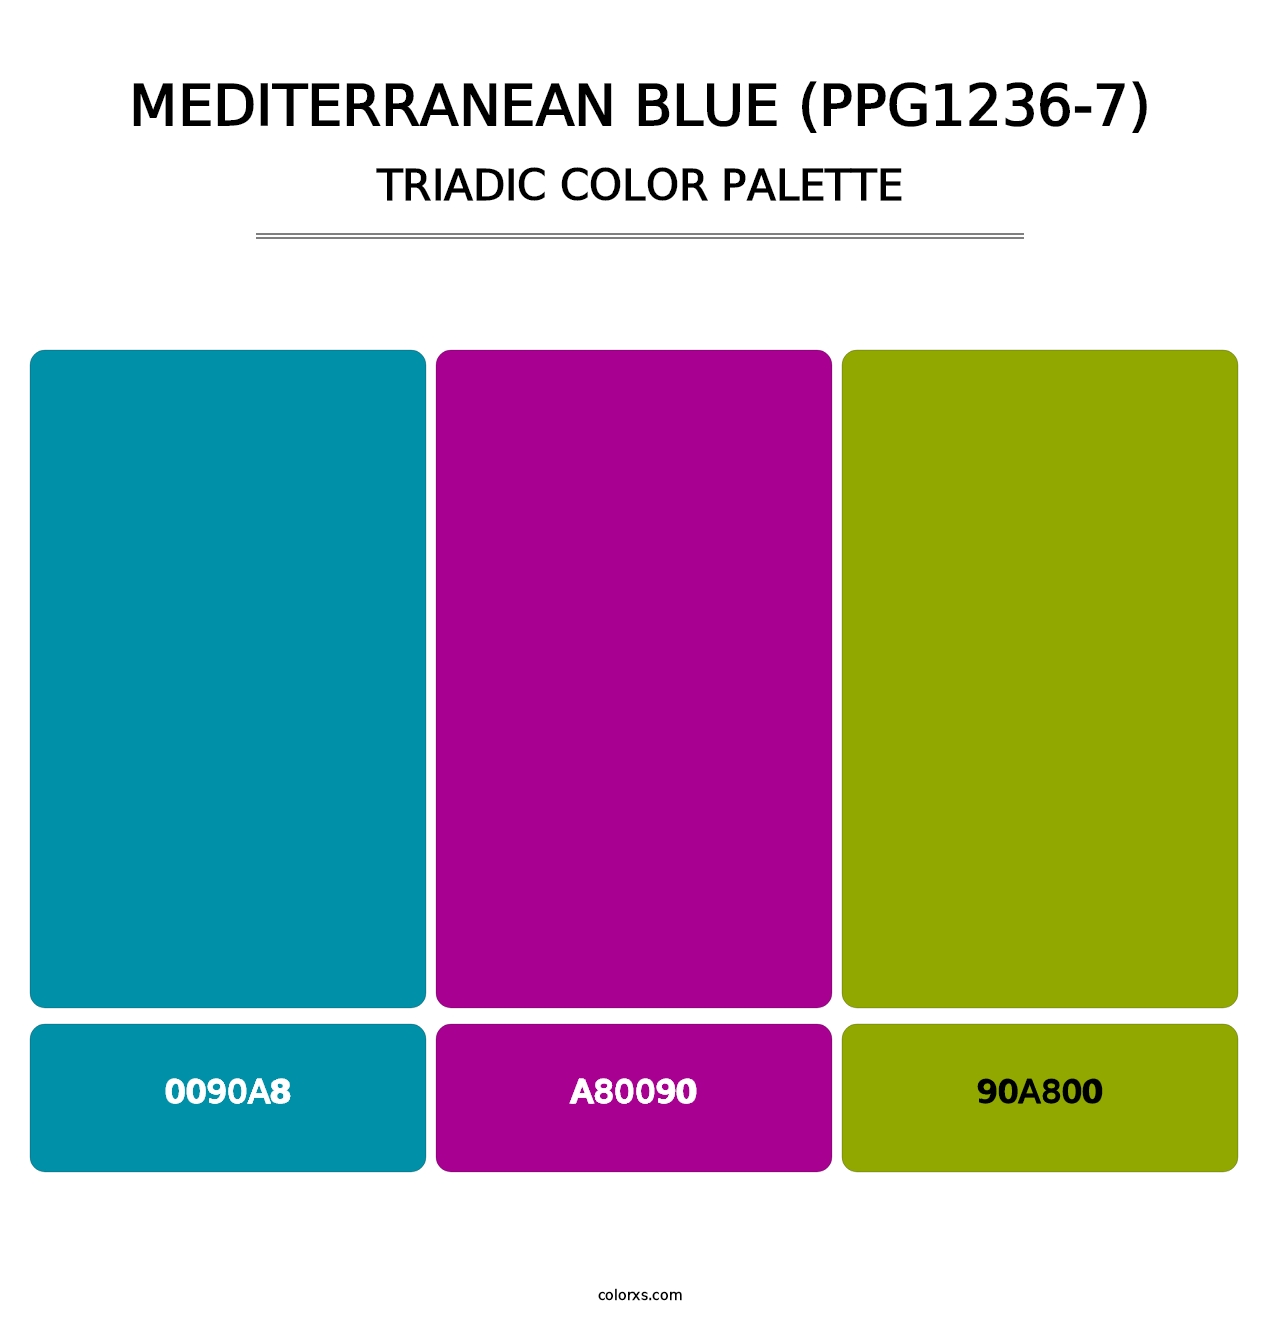 Mediterranean Blue (PPG1236-7) - Triadic Color Palette